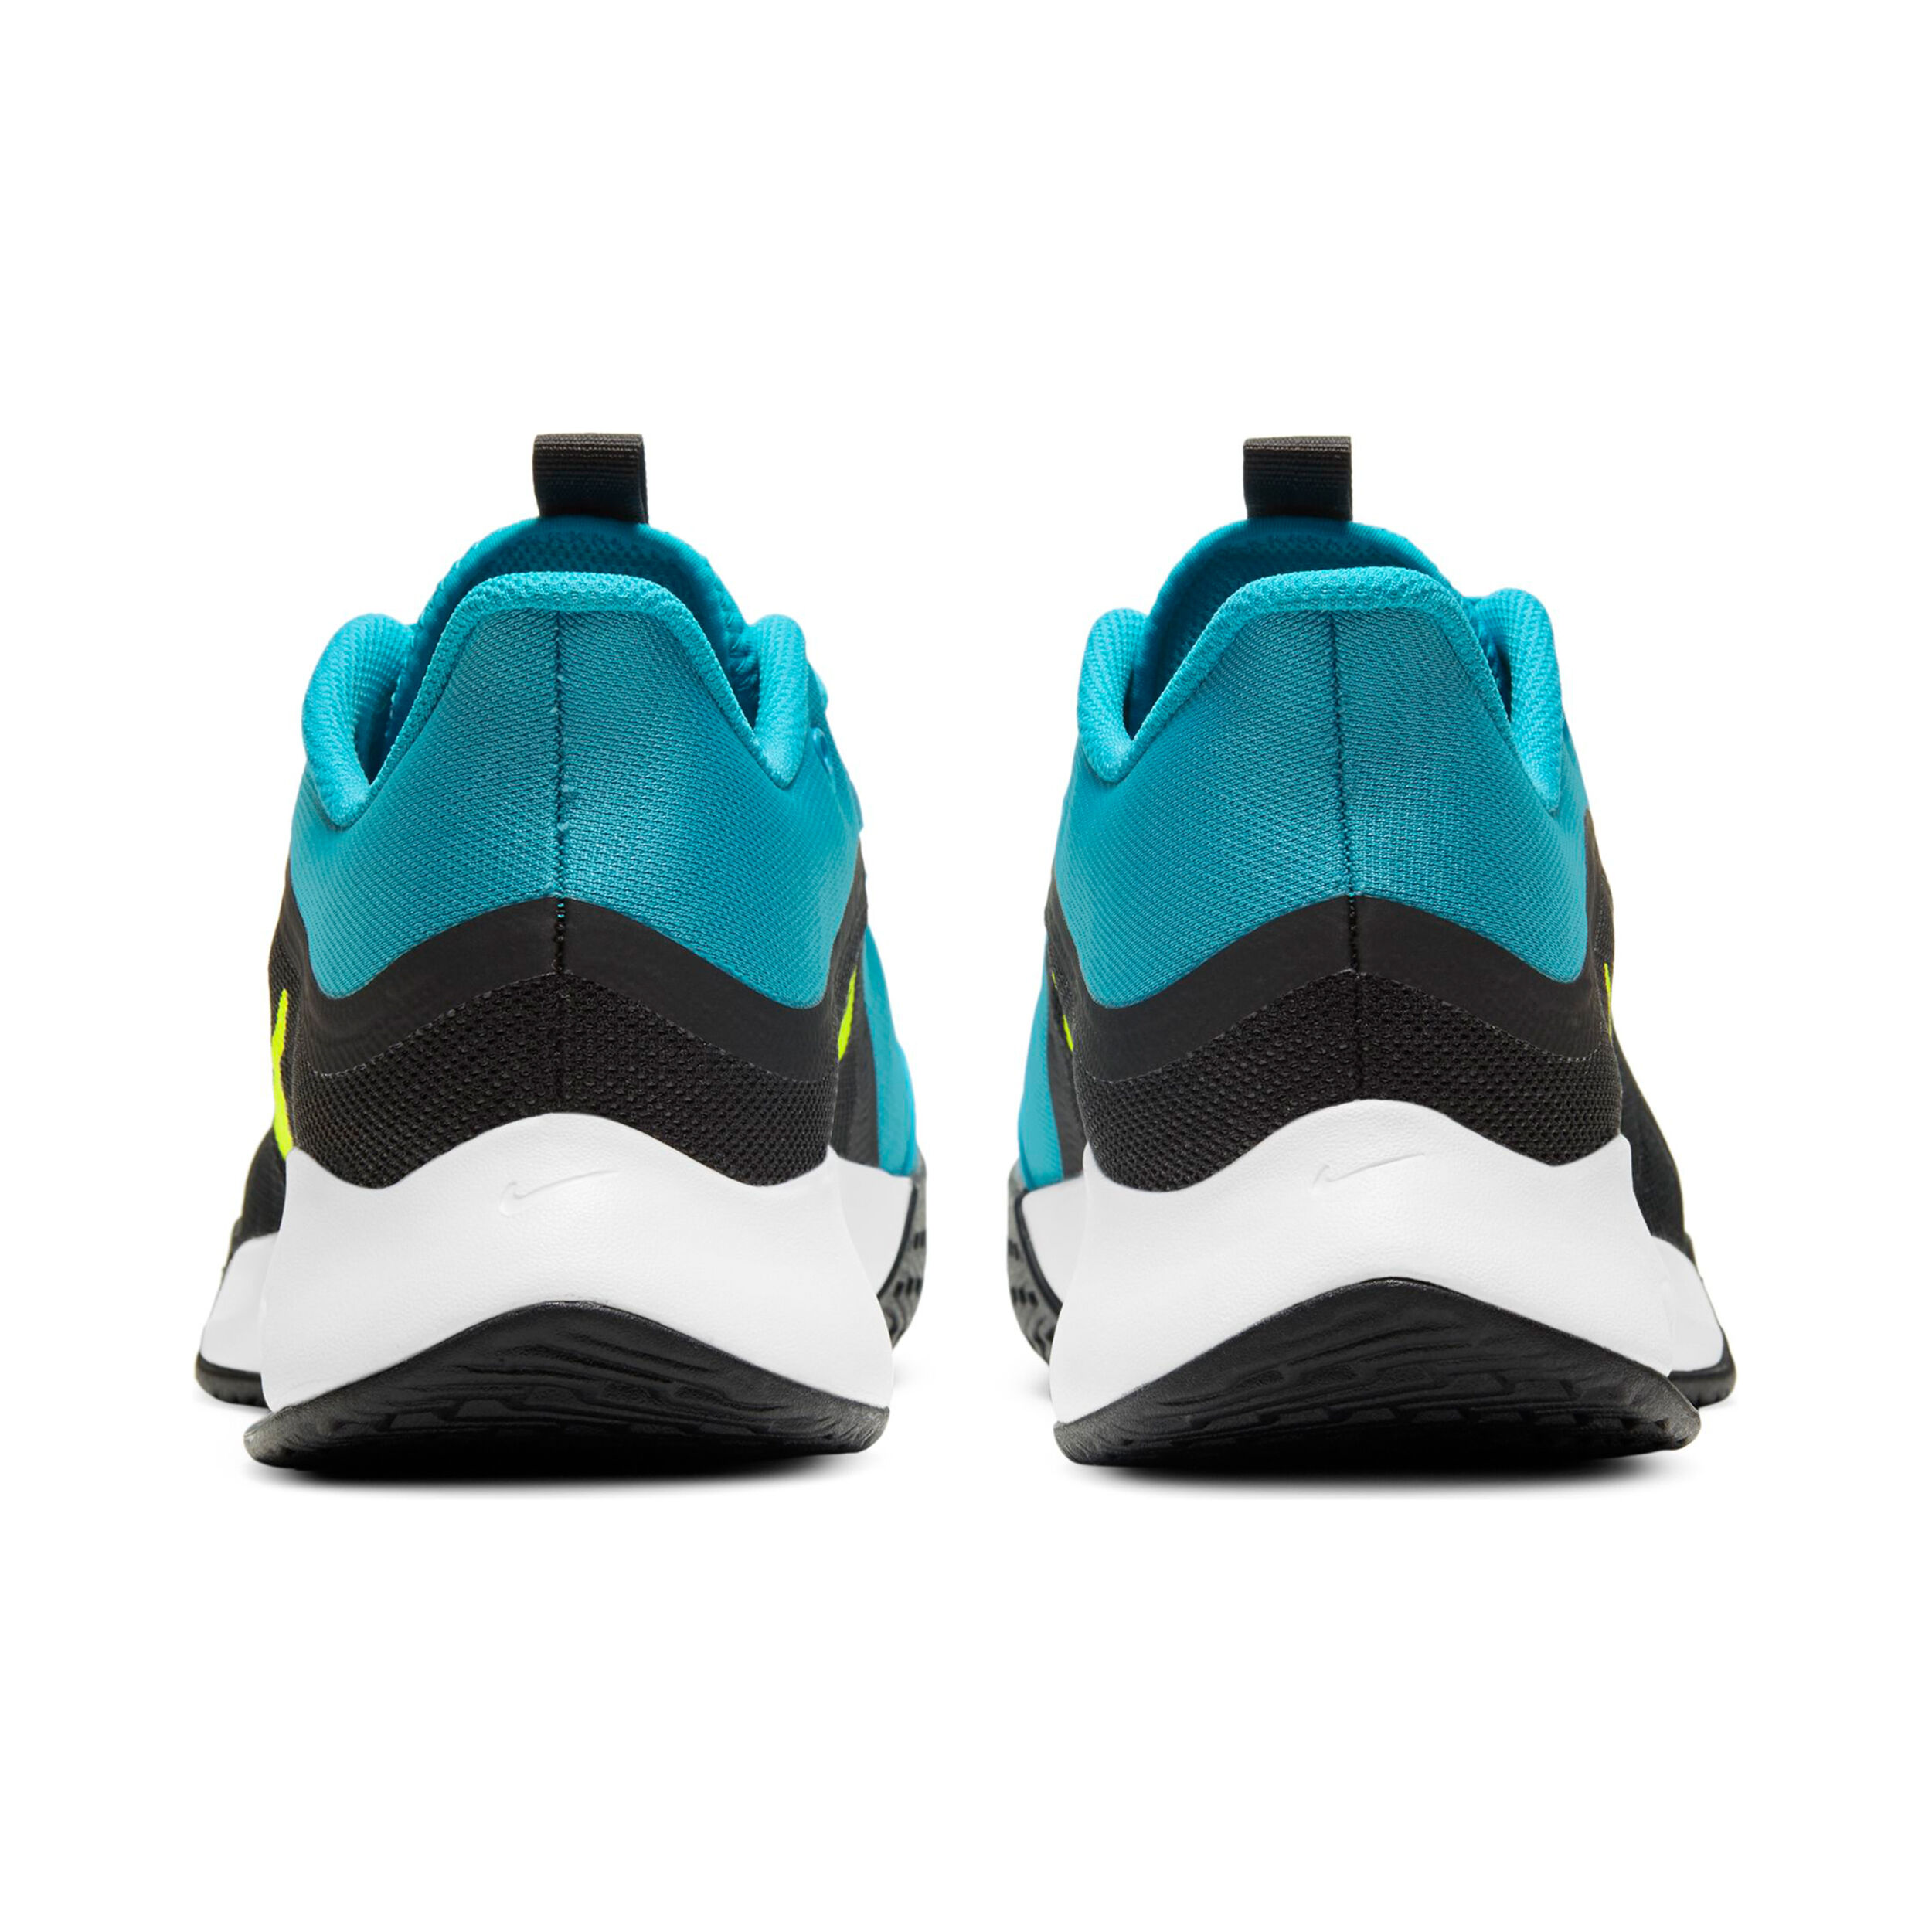 buy Nike Air Max Volley All Court Shoe Men - Turquoise, Black ... وجود صيبان بدون قمل